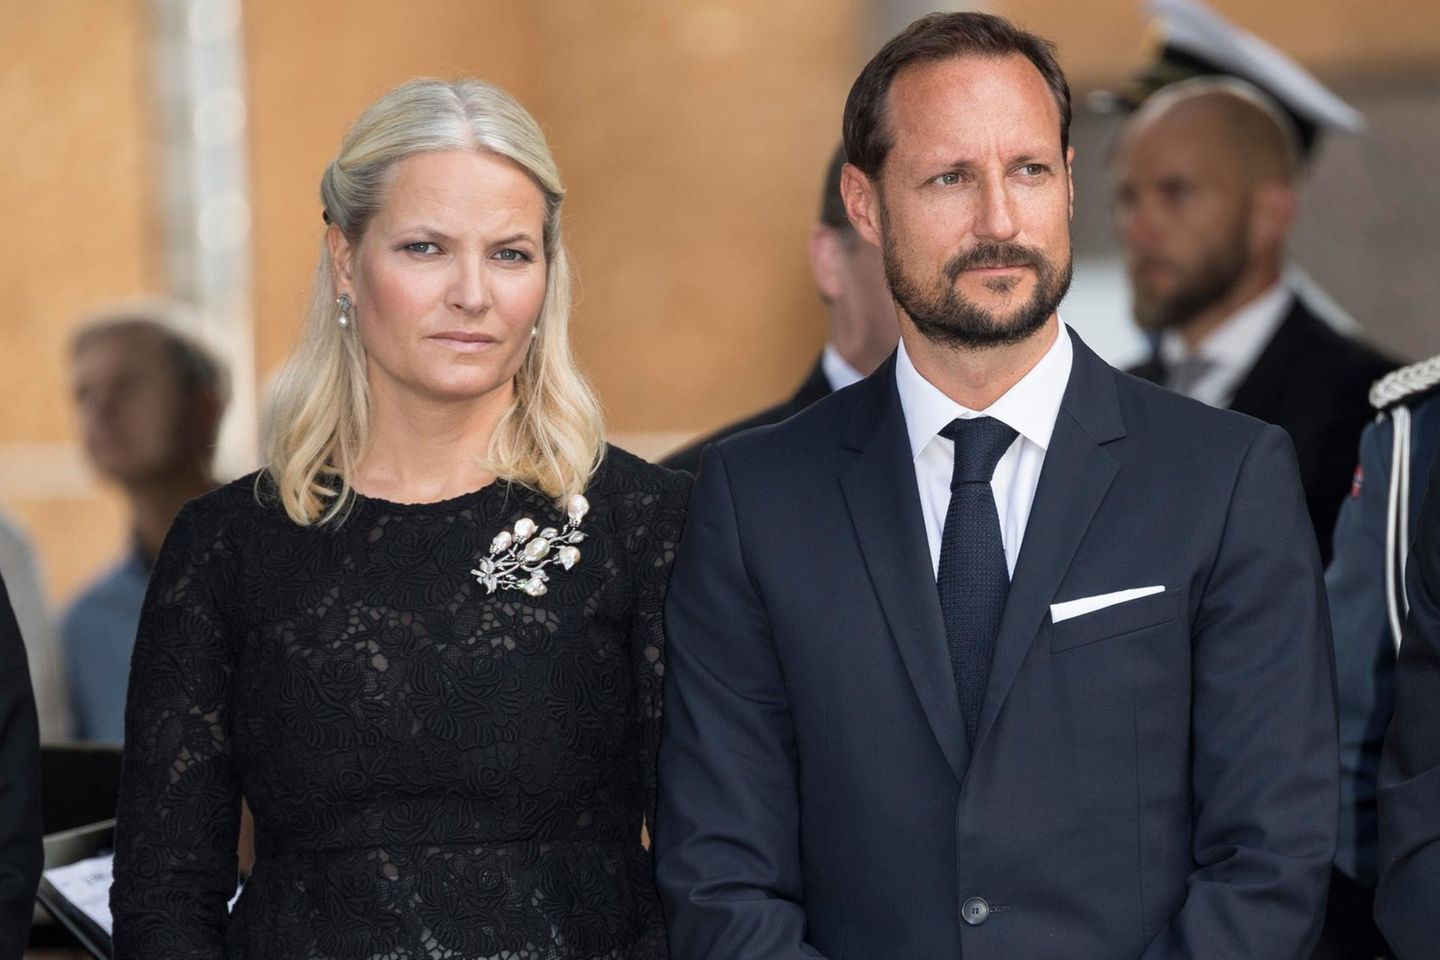 Prinzessin Mette-Marit + Prinz Haakon